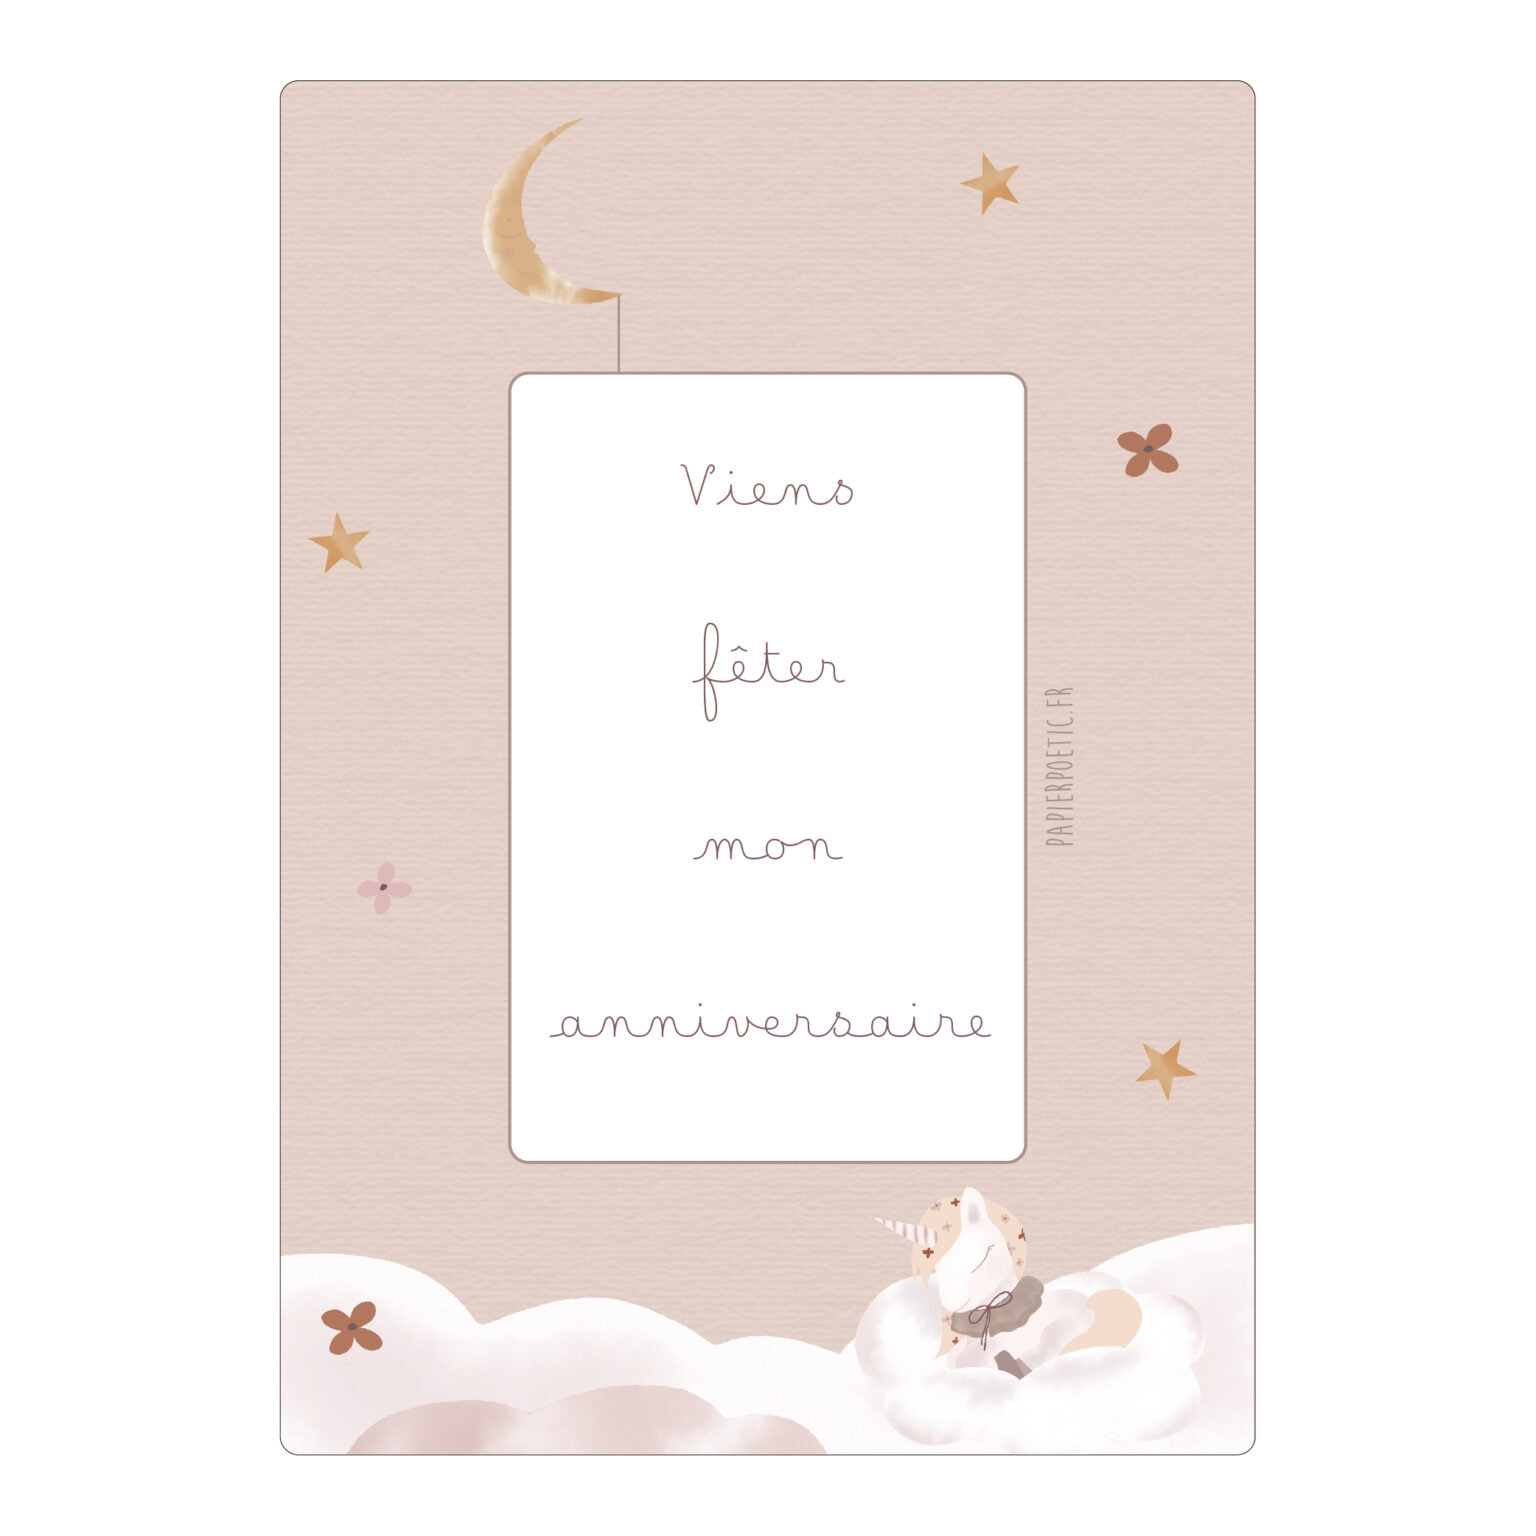 Papier Poetic – Cartes d’invitations anniversaires Licorne/etoiles